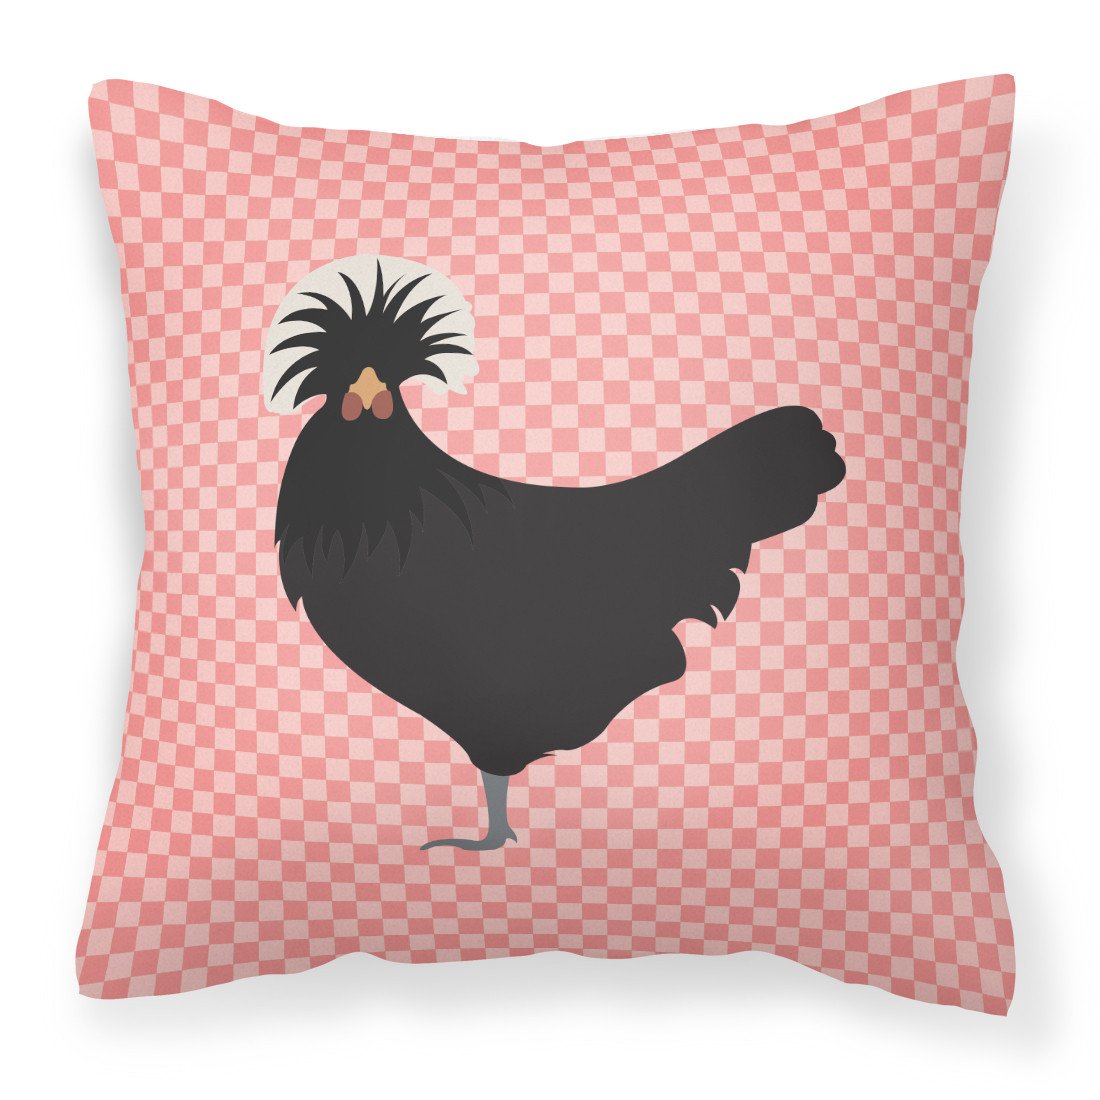 Polish Poland Chicken Pink Check Fabric Decorative Pillow BB7834PW1818 by Caroline's Treasures